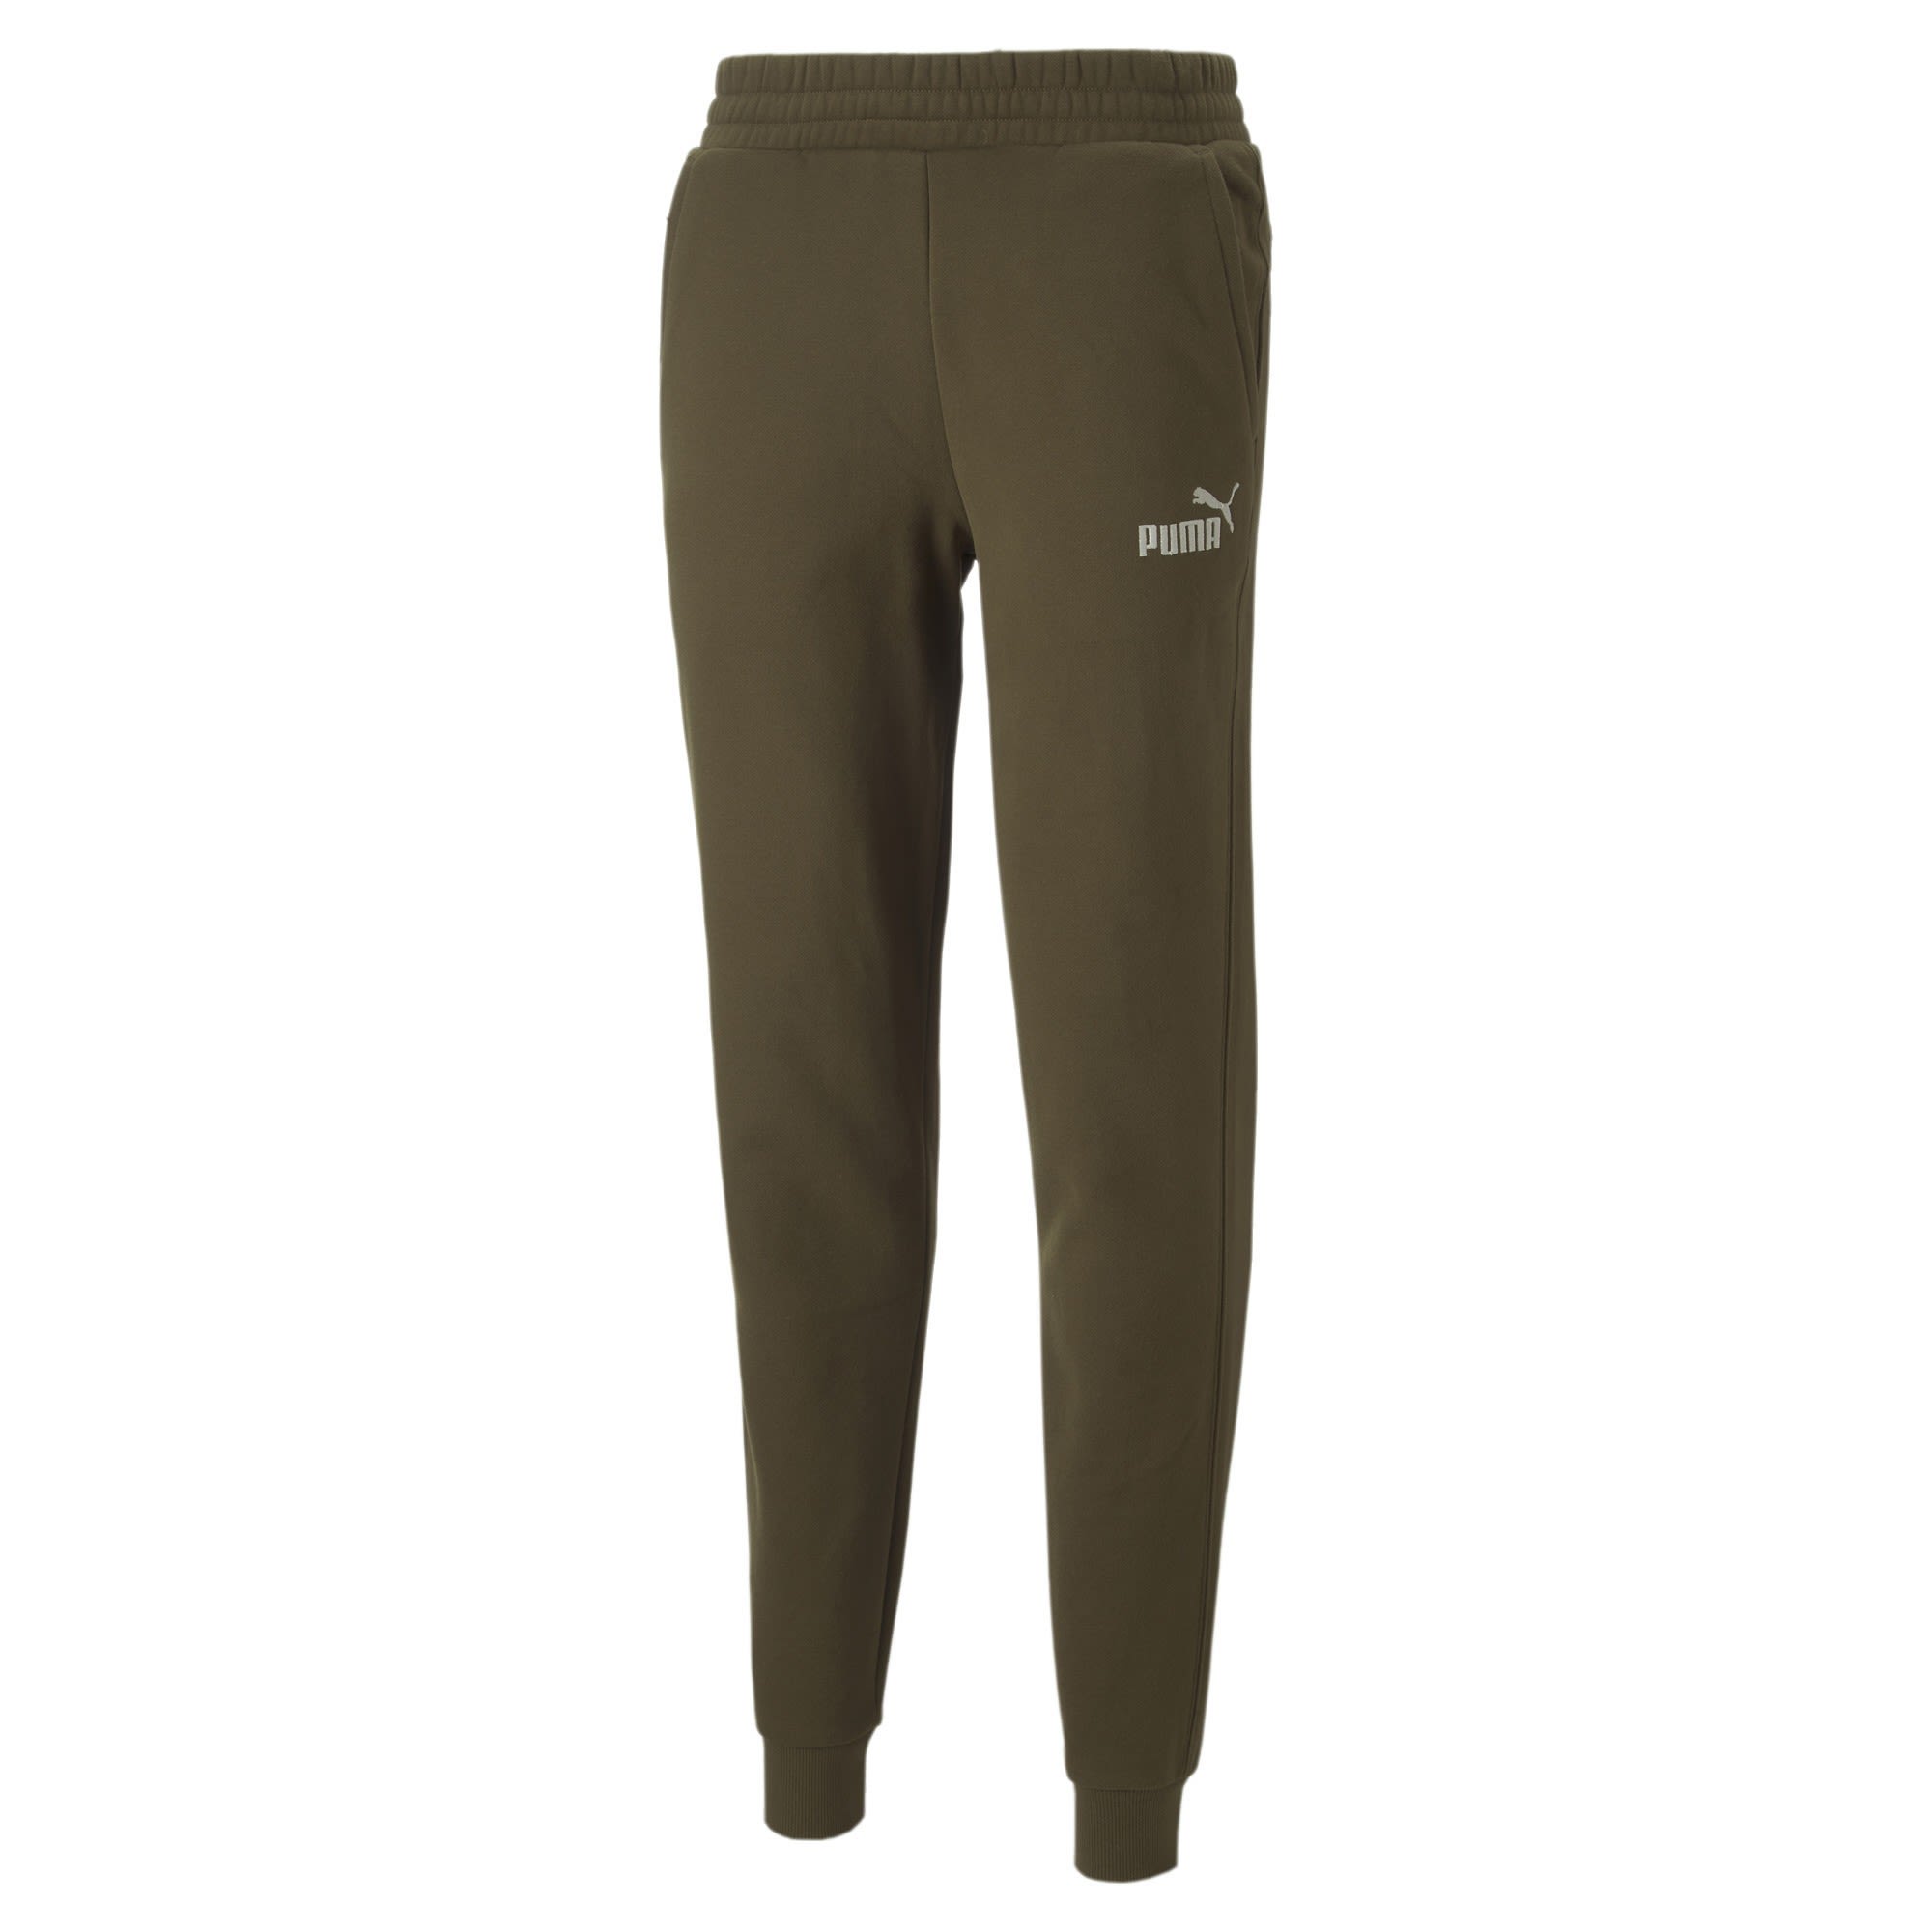 Puma Essentials Elevated Sweatpants FL CL Grn- Male Lange Hosen- Grsse S - Farbe Deep Olive unter Puma